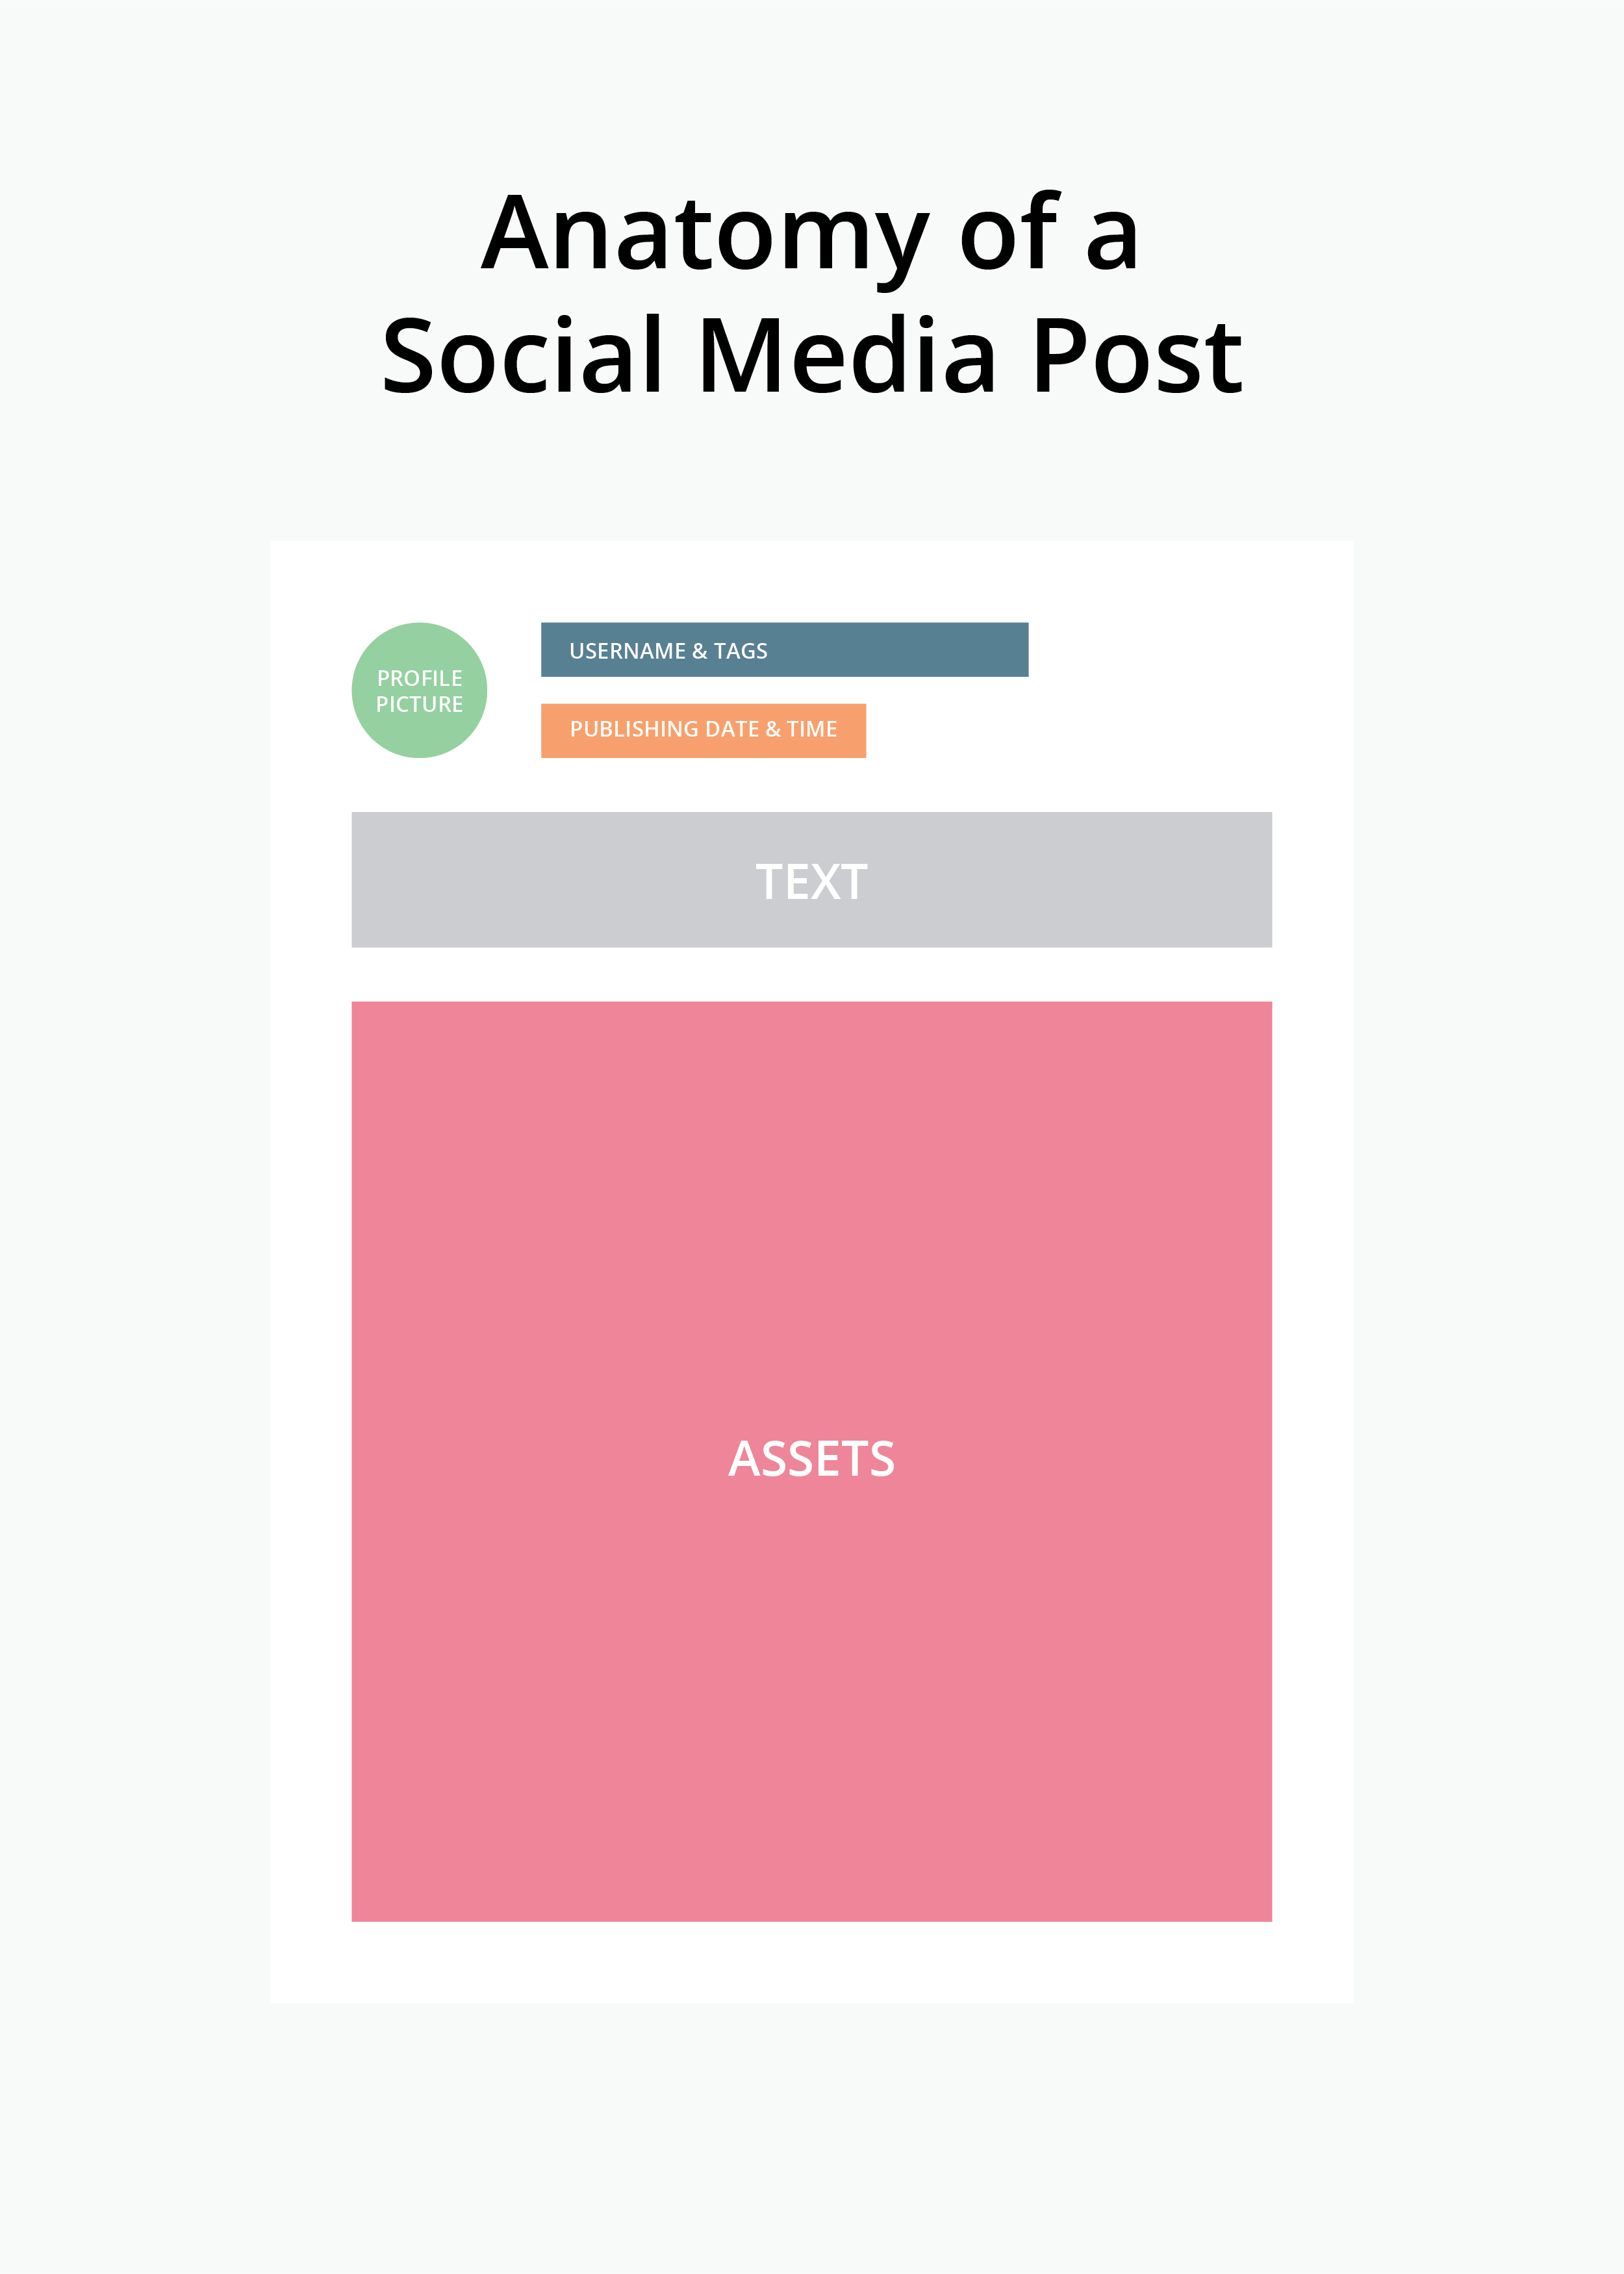 The elements of a social media post